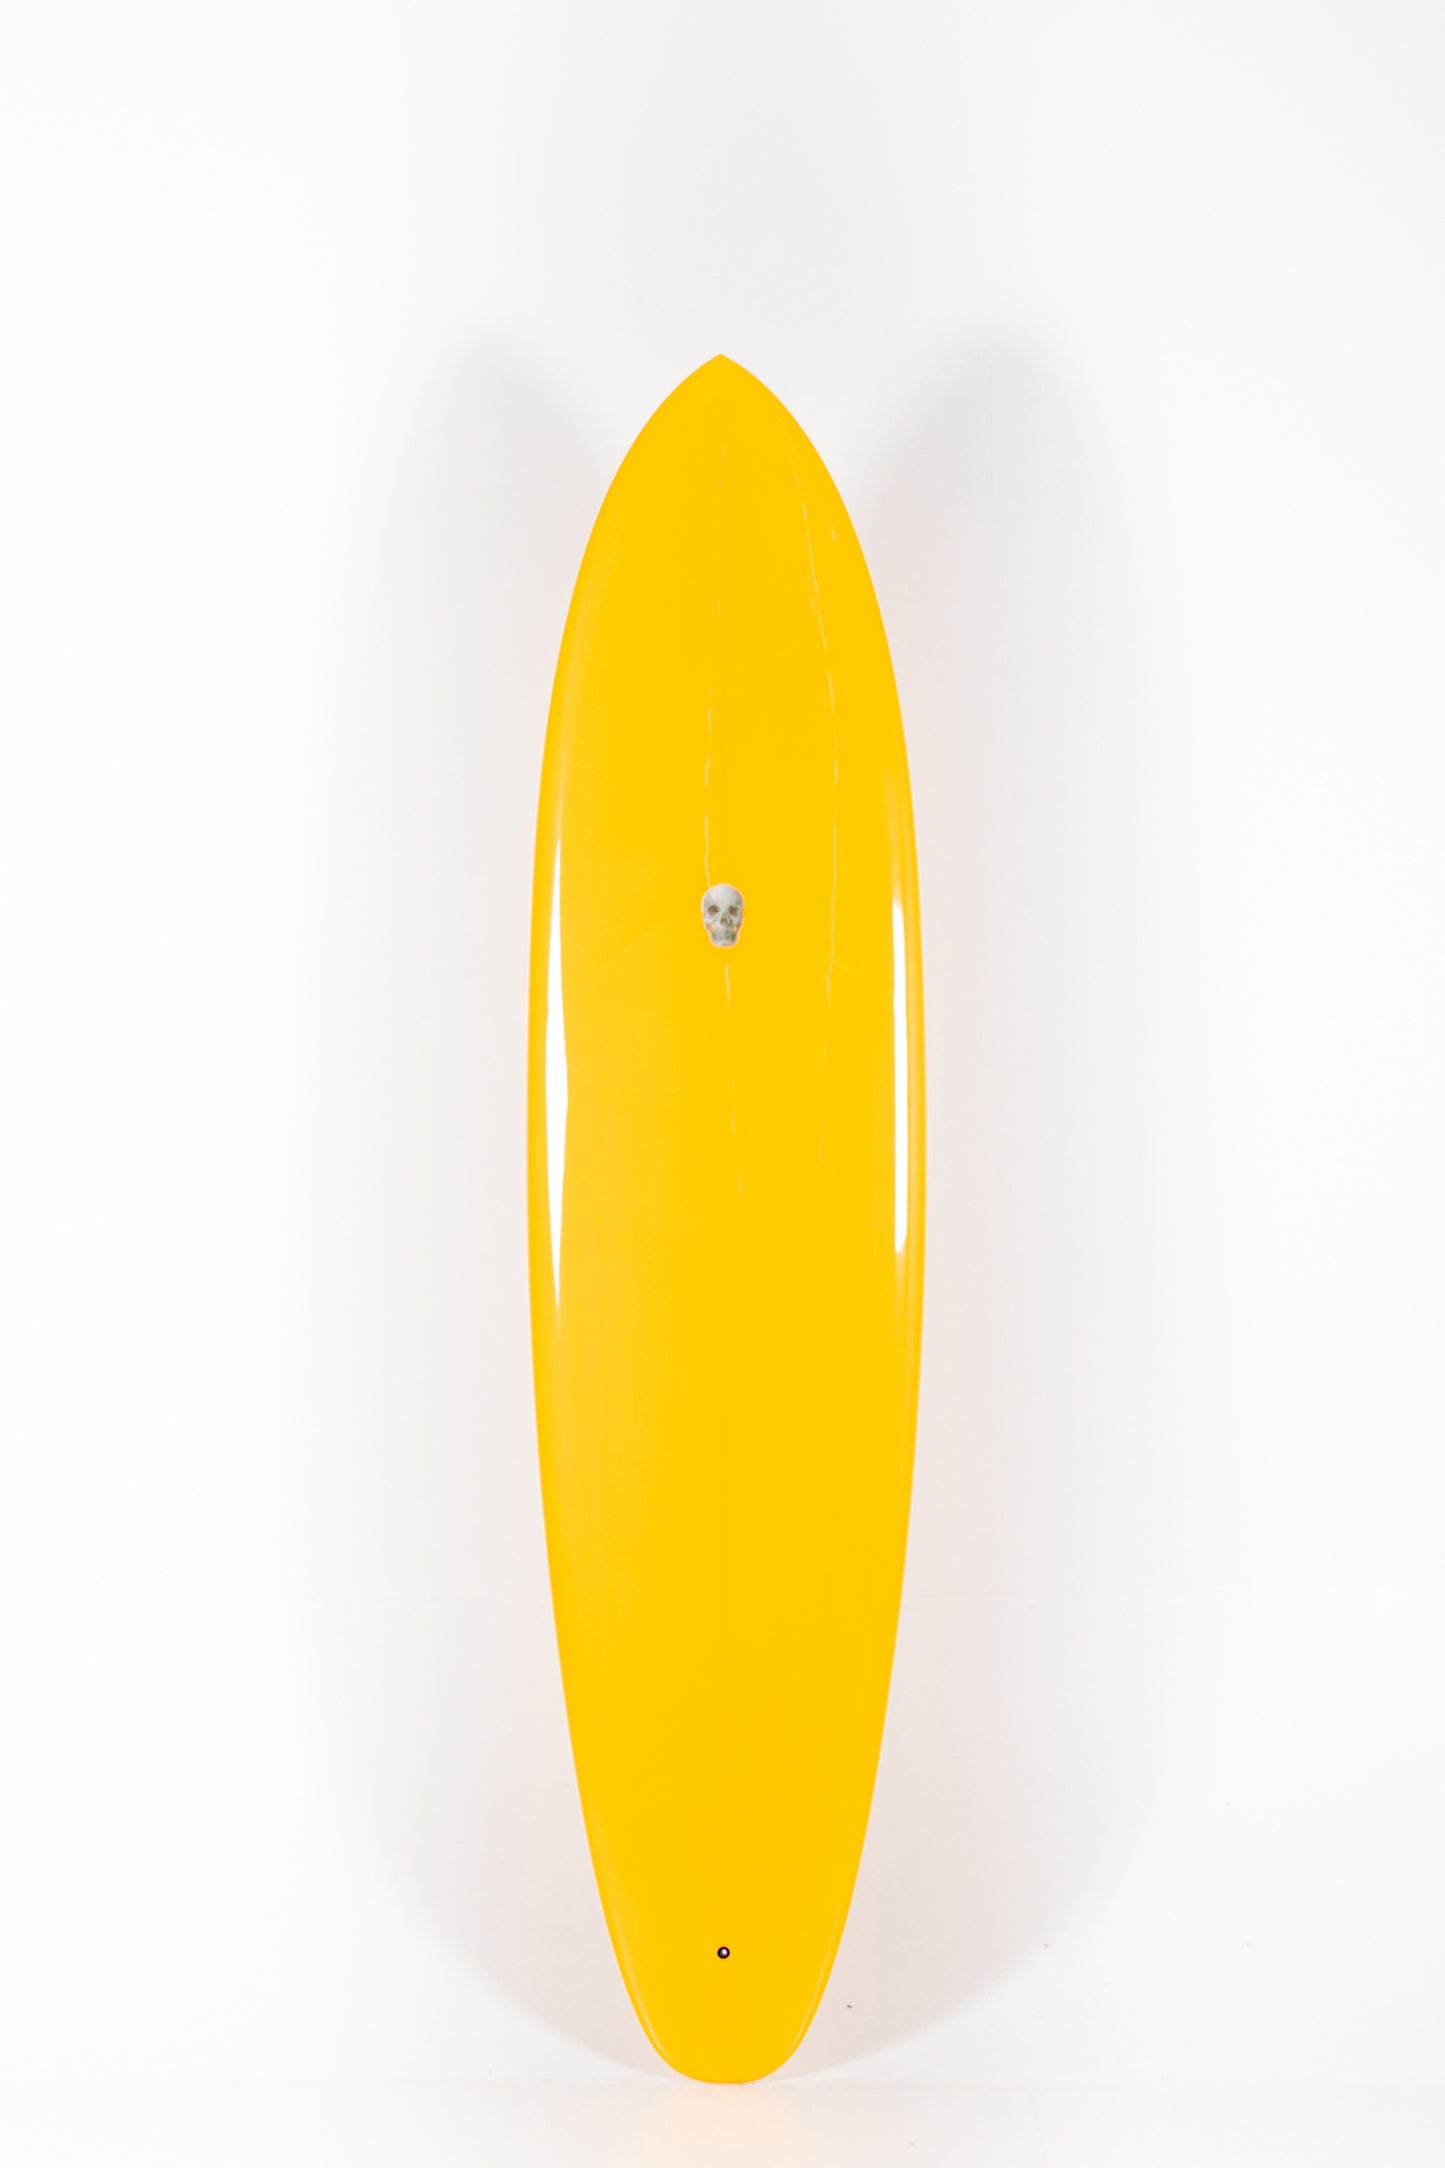 Pukas Surf shop - Christenson Surfboards - FLAT TRACKER 2.0 - 7'6" x 21 1/4 x 2 7/8 - CX03147